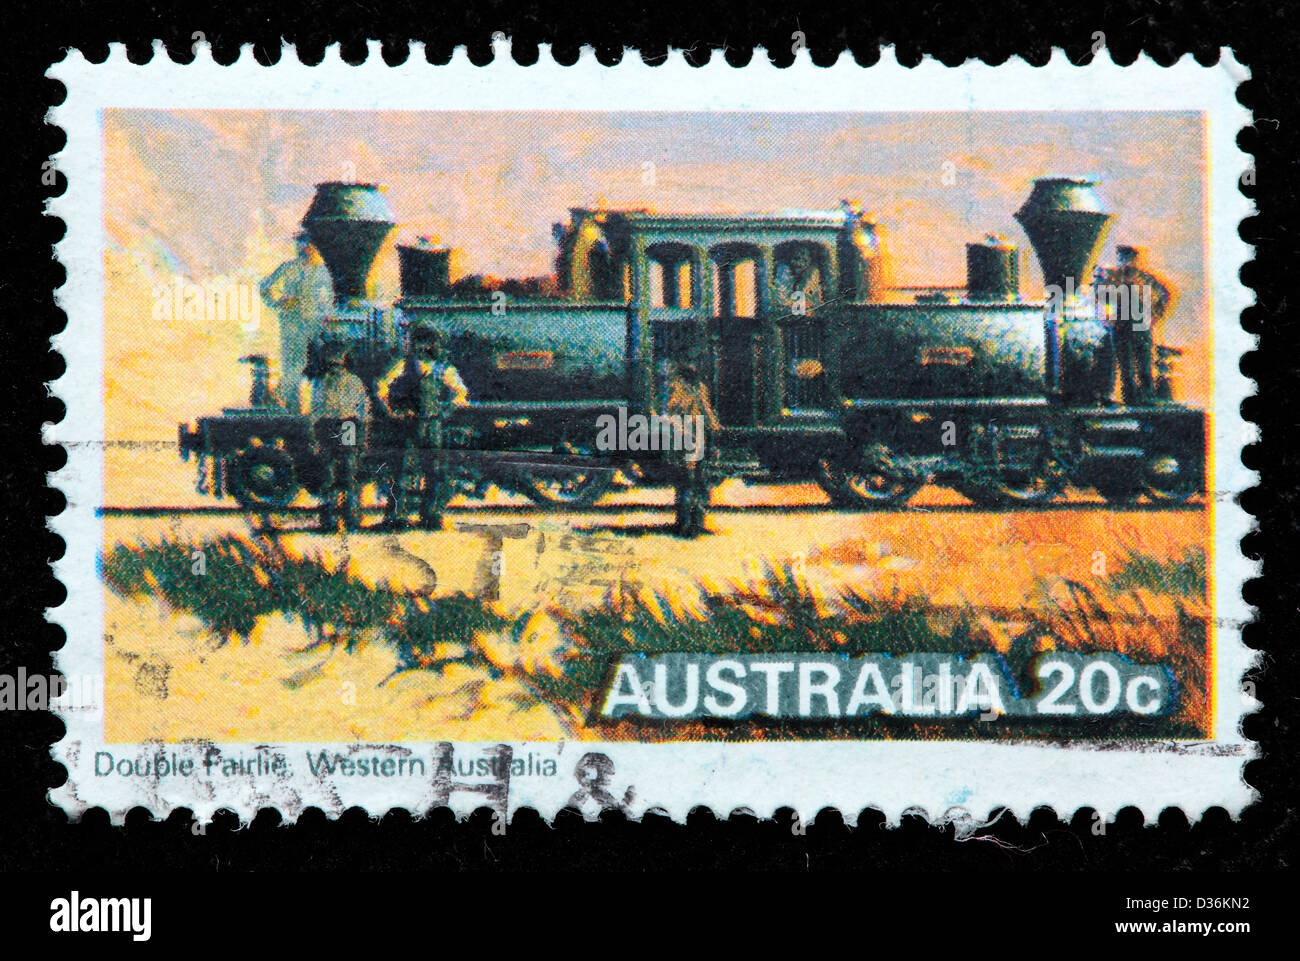 Double Fairlie, Steam locomotive, postage stamp, Australia, 1979 Stock Photo